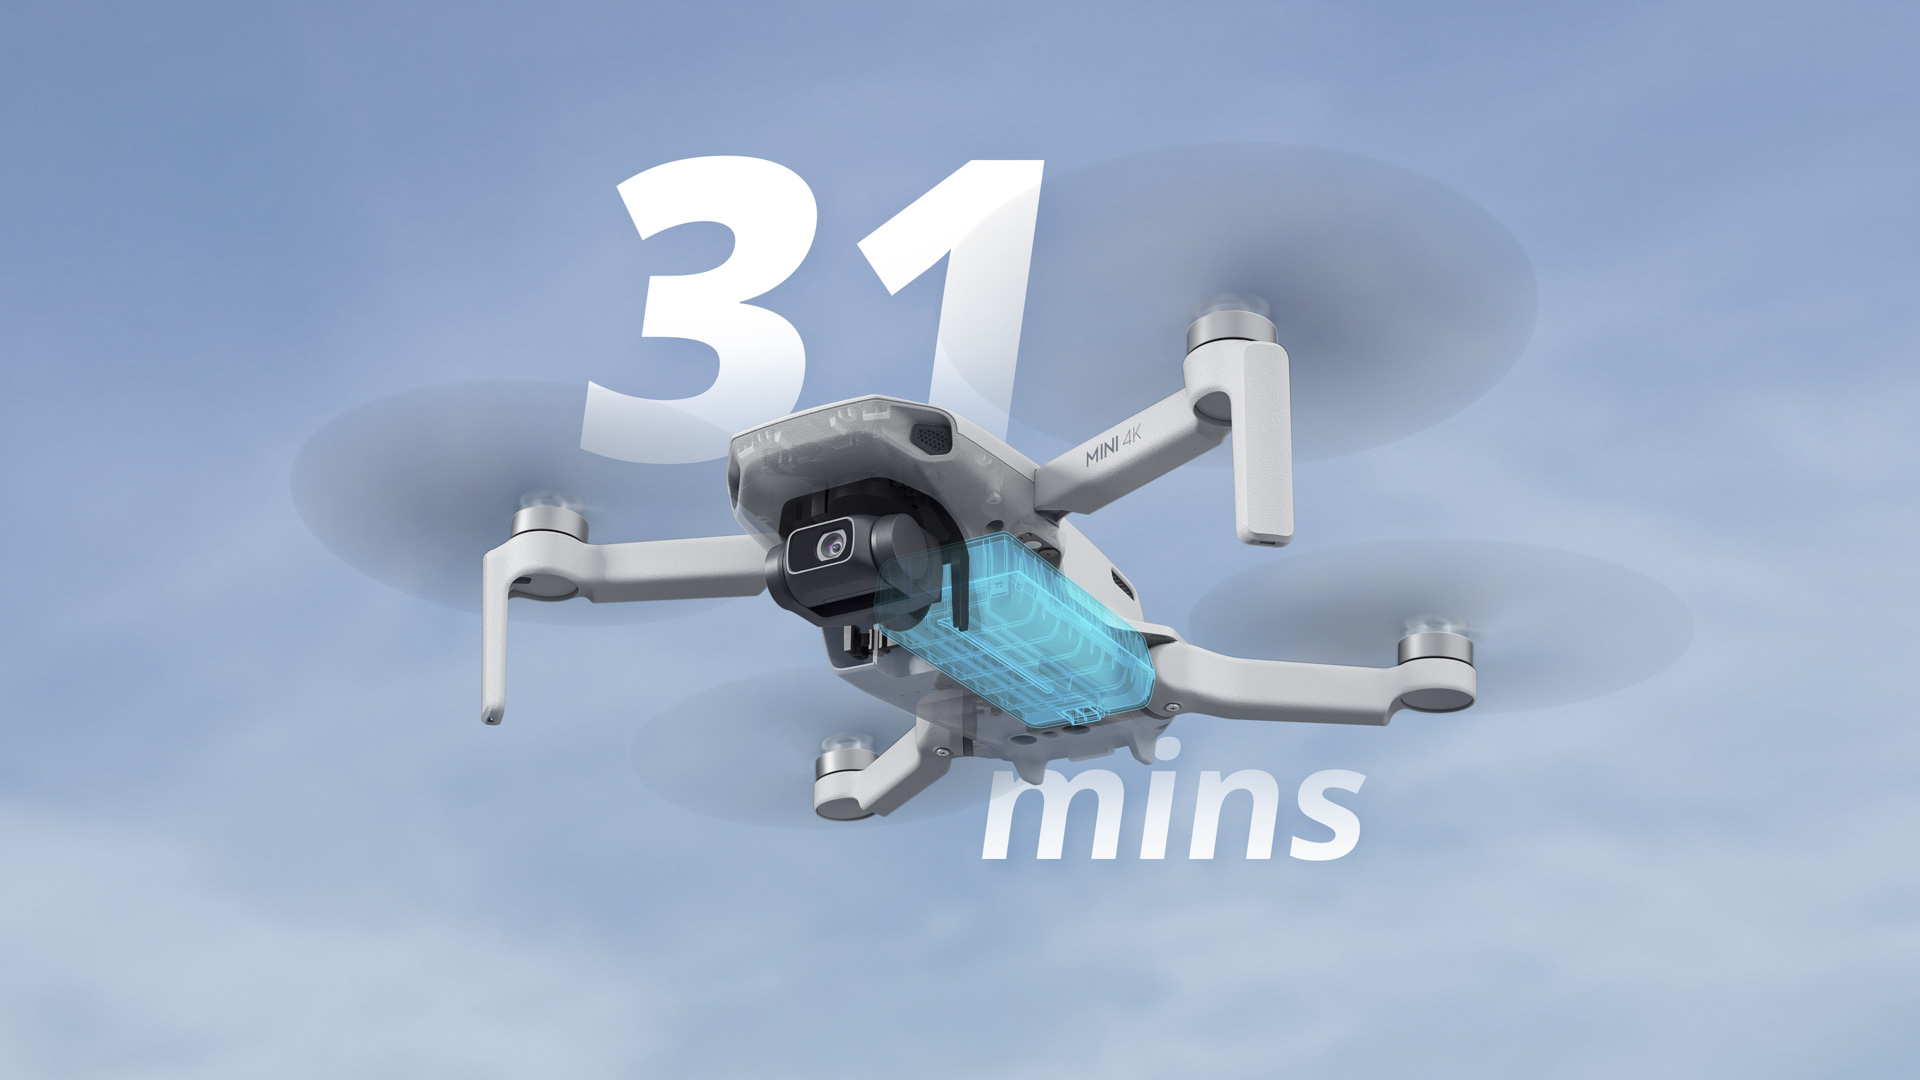 DJI Mini 4K drone in flight with 31 minute battery life